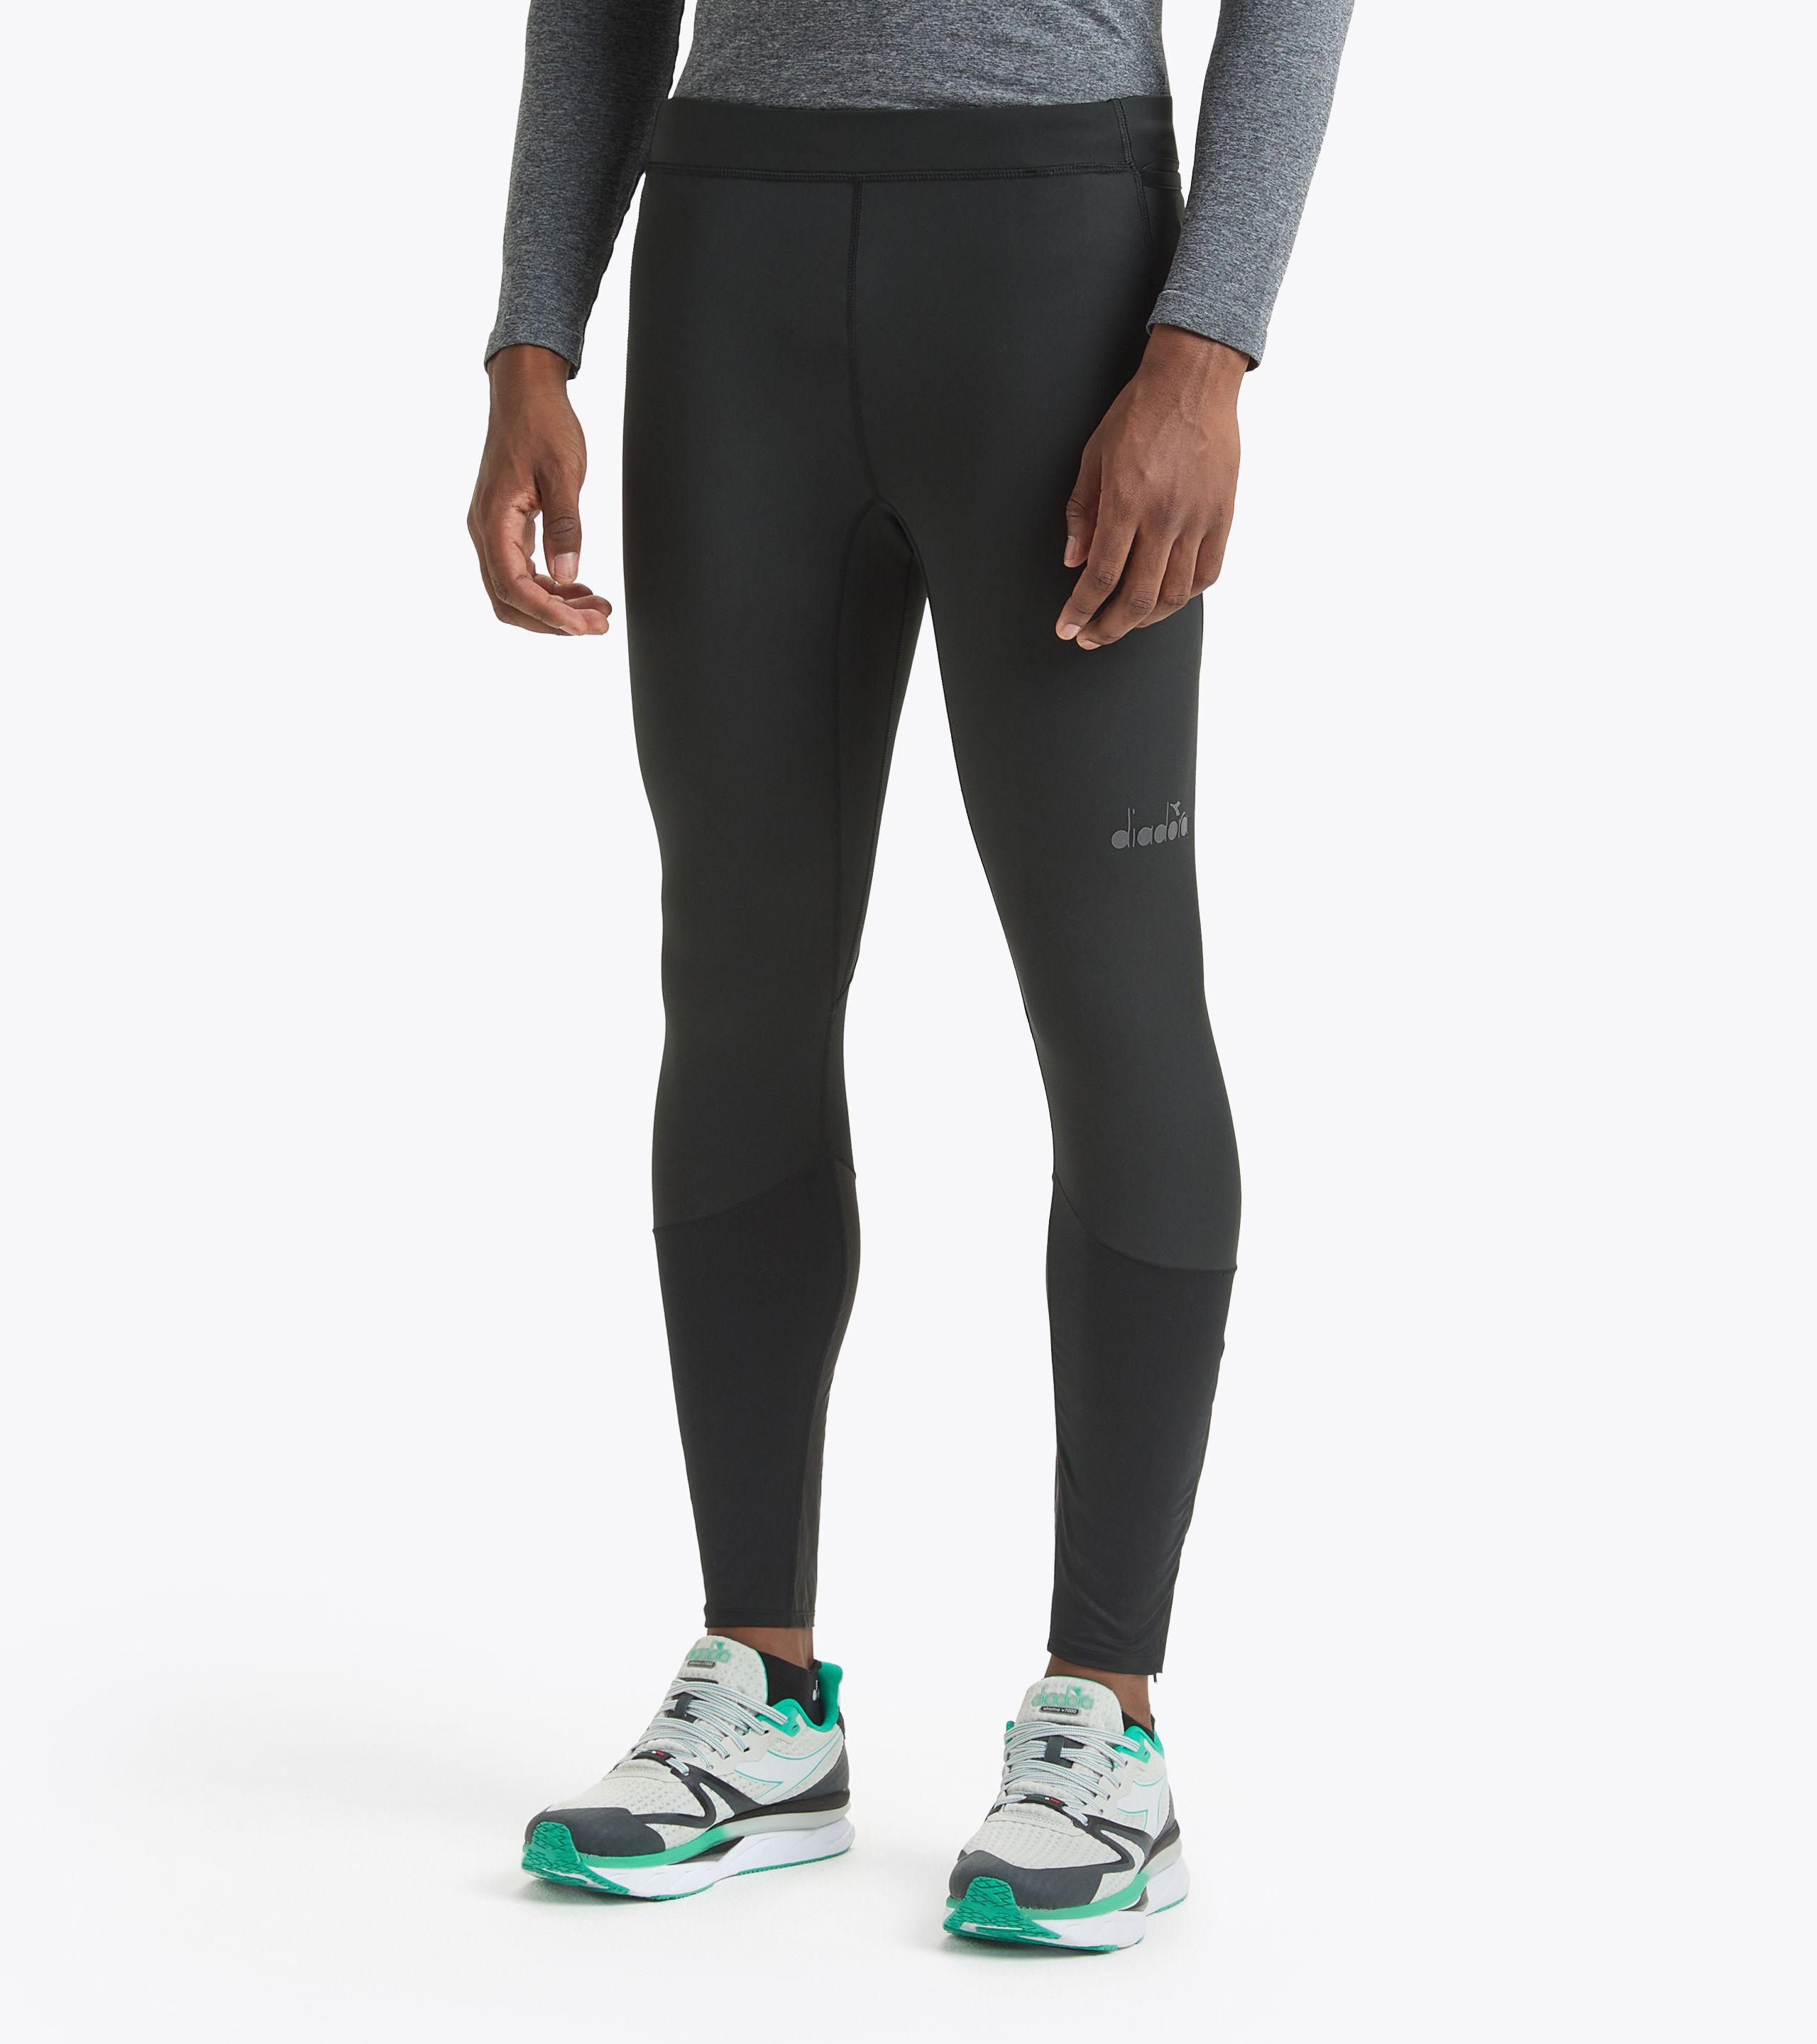 Mens Gym Compression Slim Tight Base Layer Sports Running Leggings Fitness  Pants | eBay